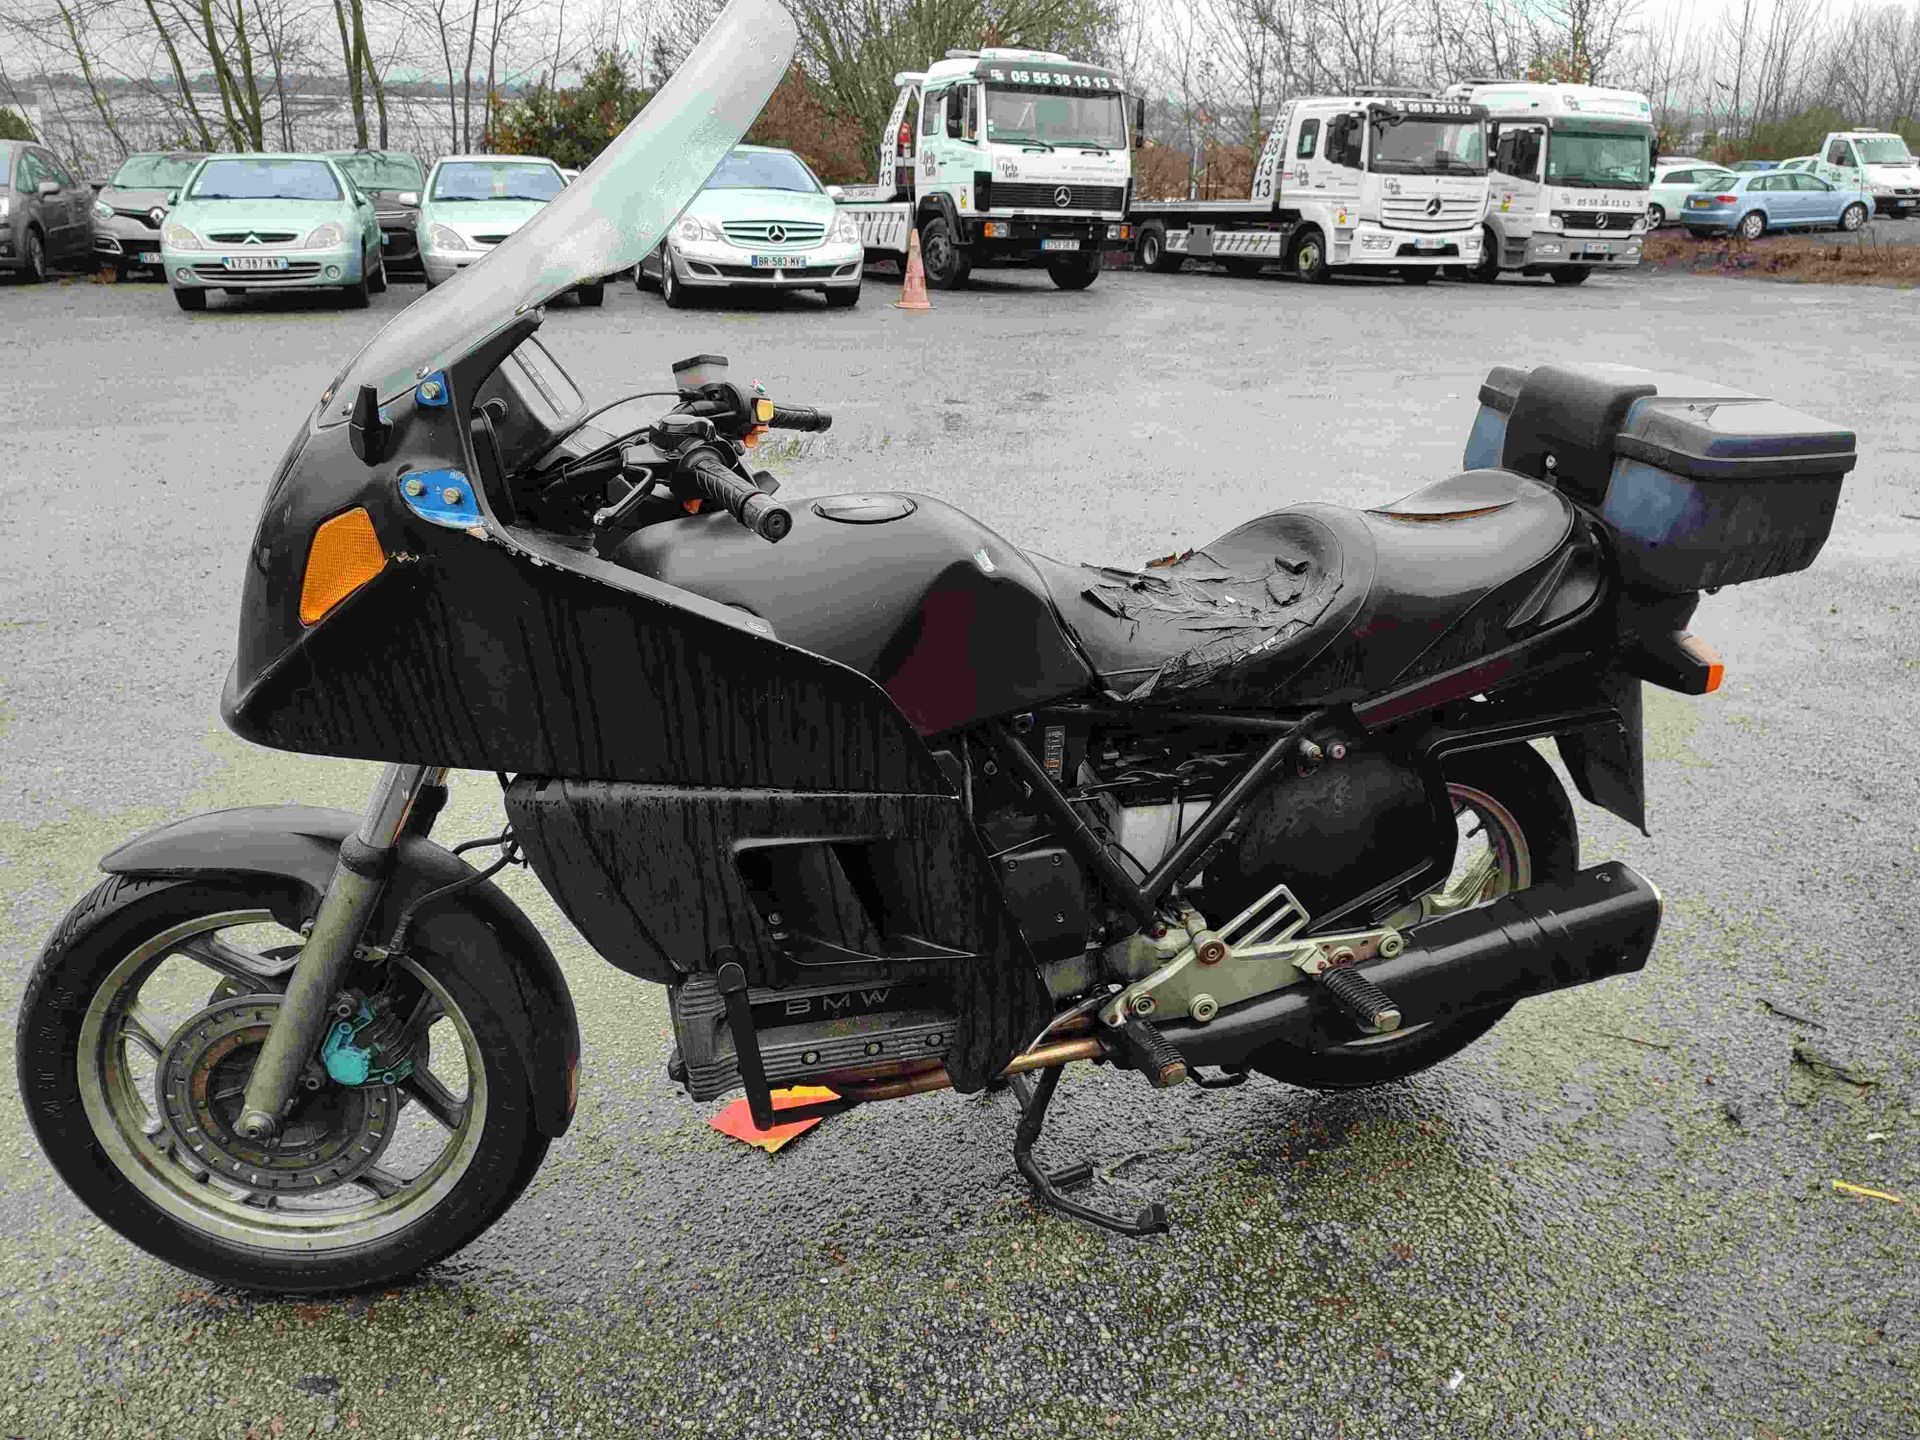 Null [ACI] Motorcycle BMW K100RT, Gasoline, imm. BW-467-EY, Type K100RT, serial &hellip;